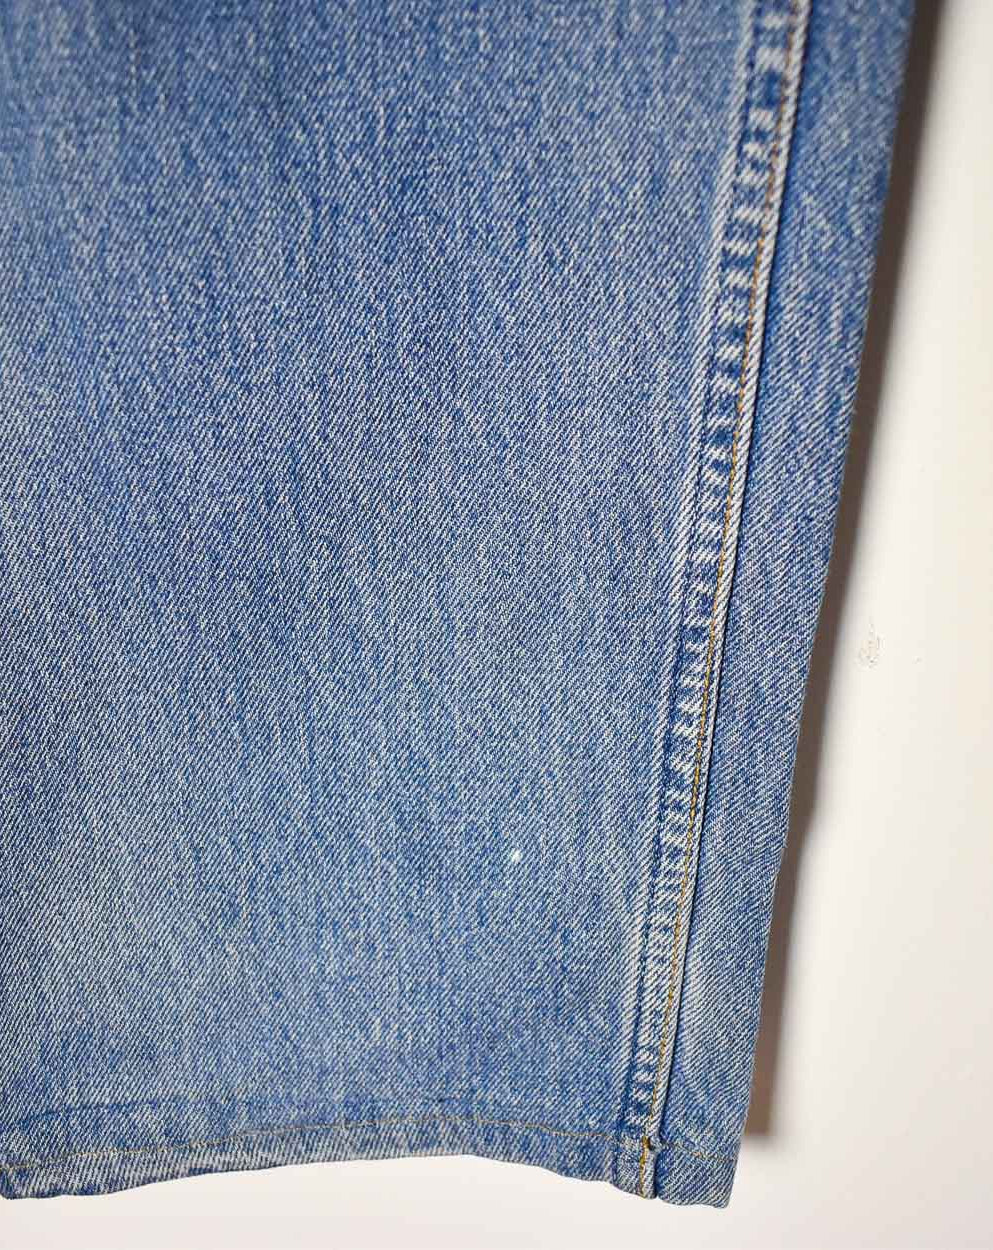 Baby Levi's 501 Jeans - W32 L30